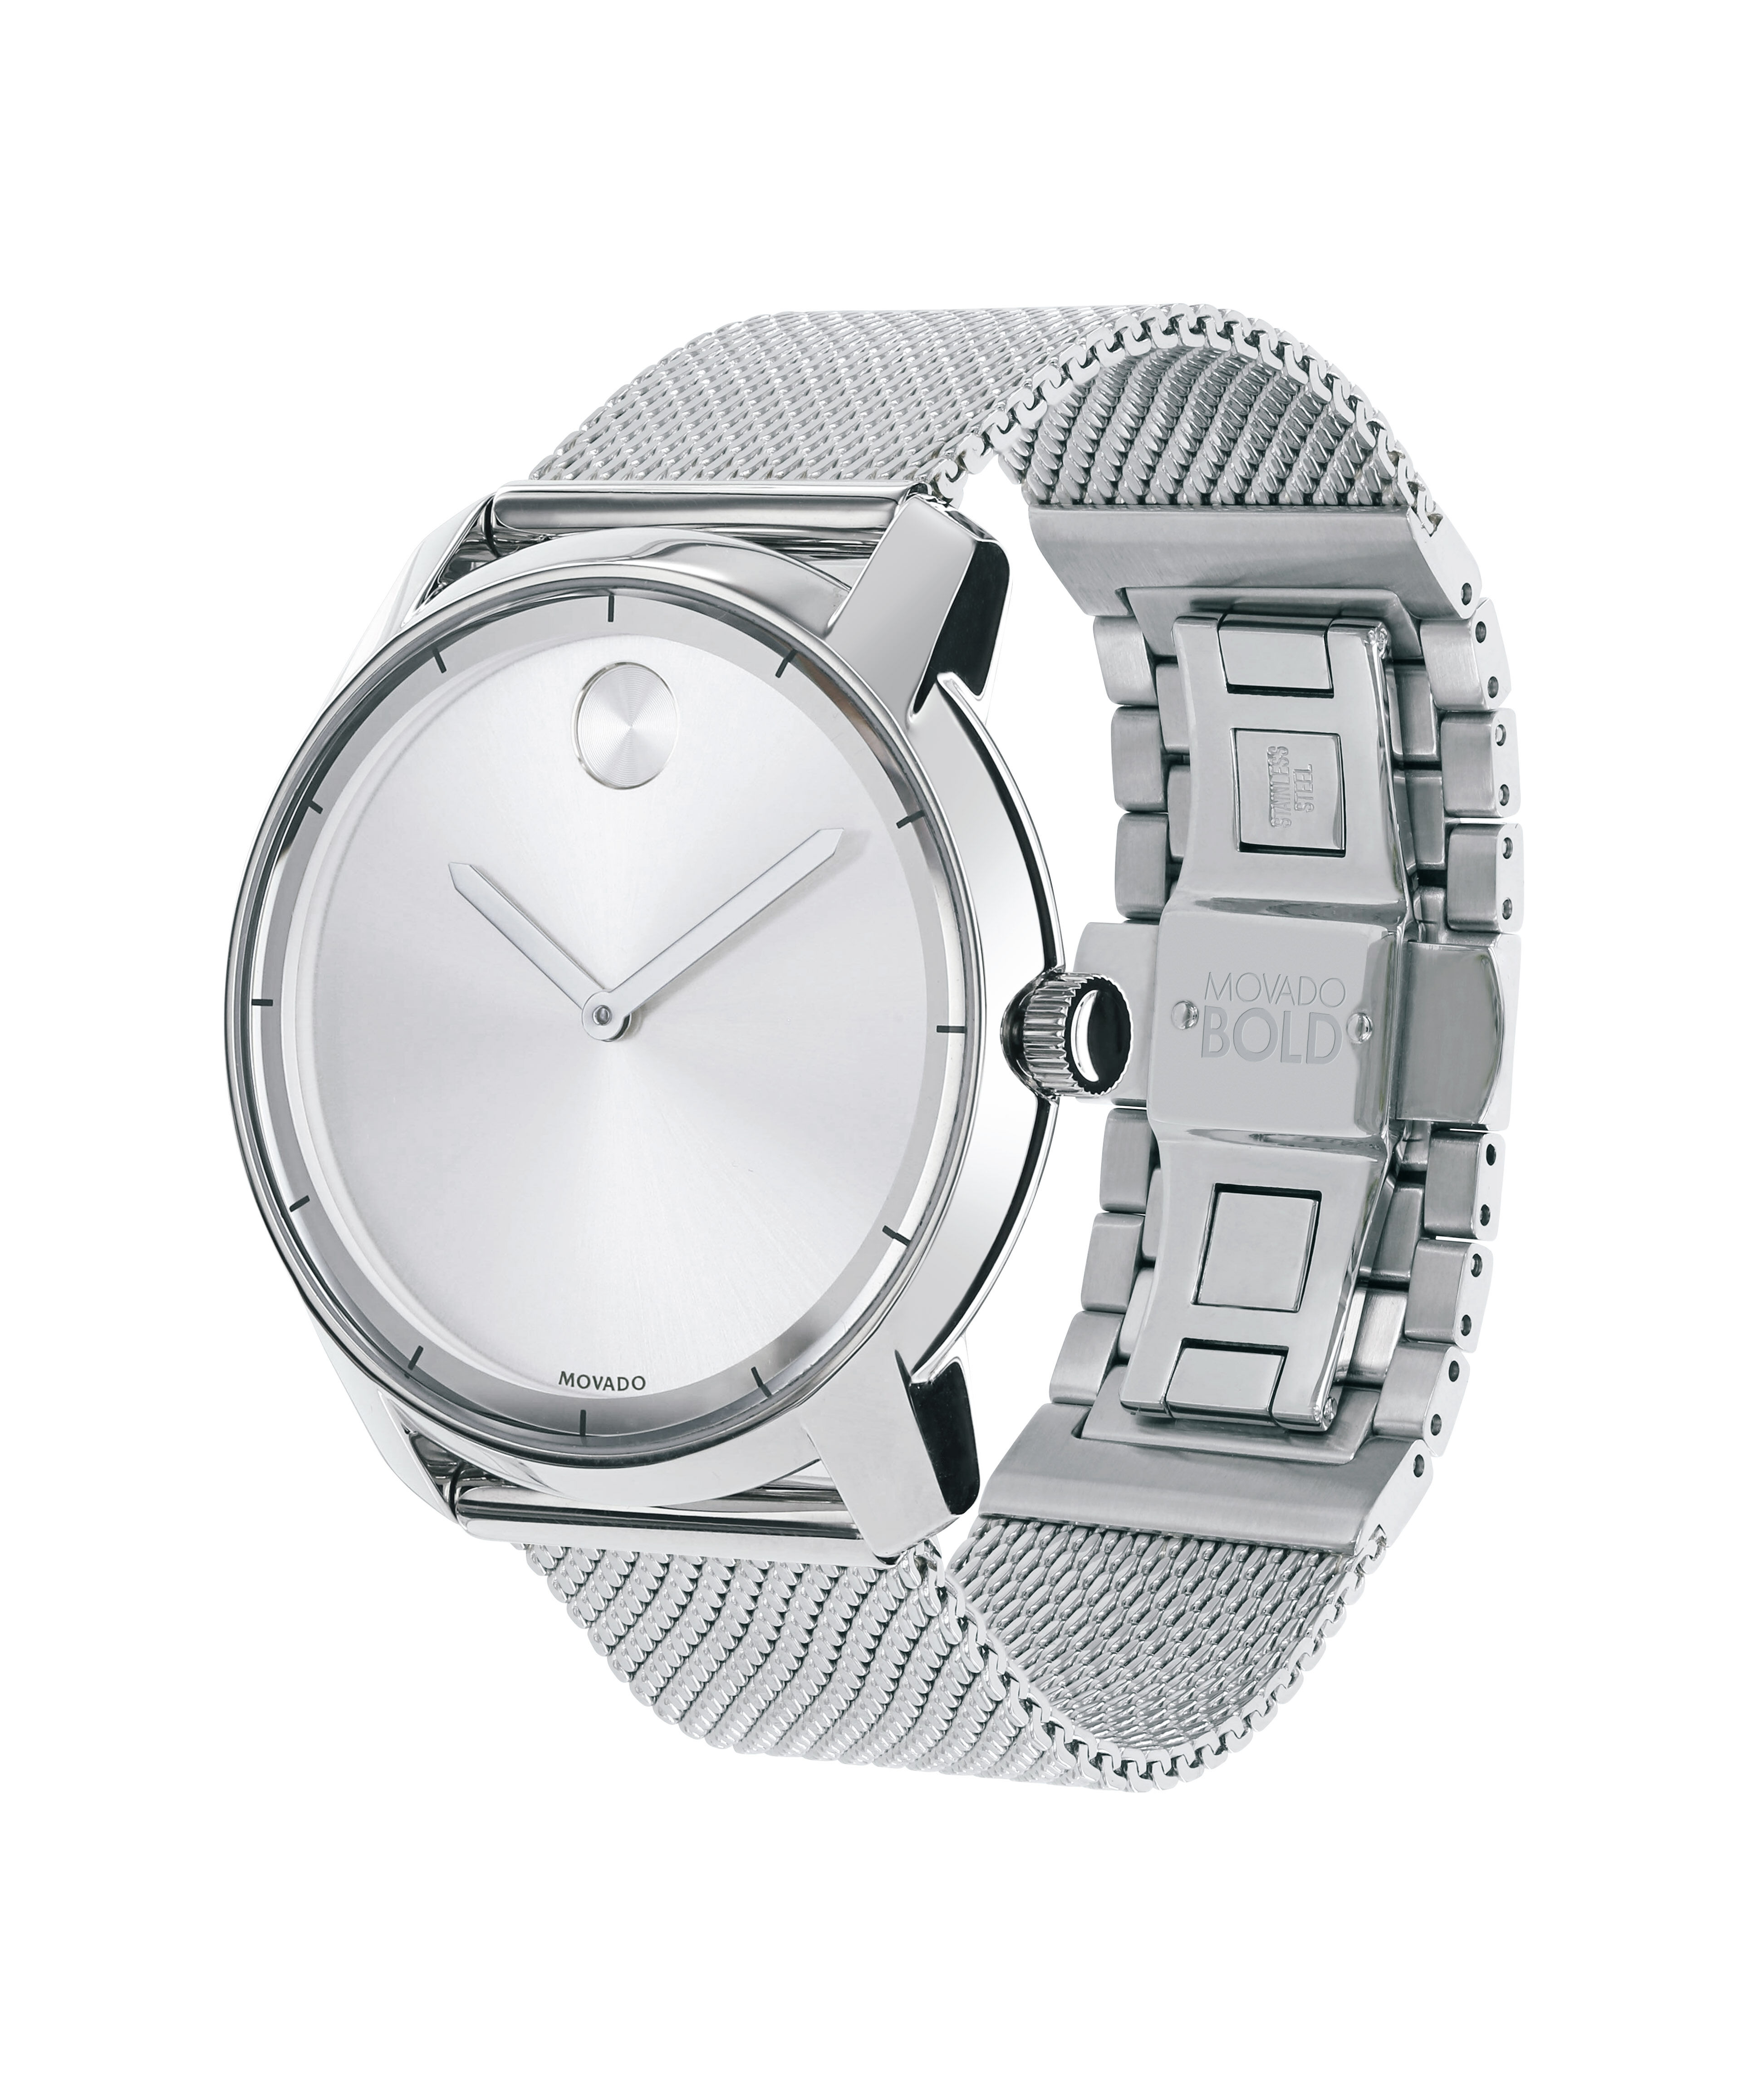 quality replica watch replicas hublot watches